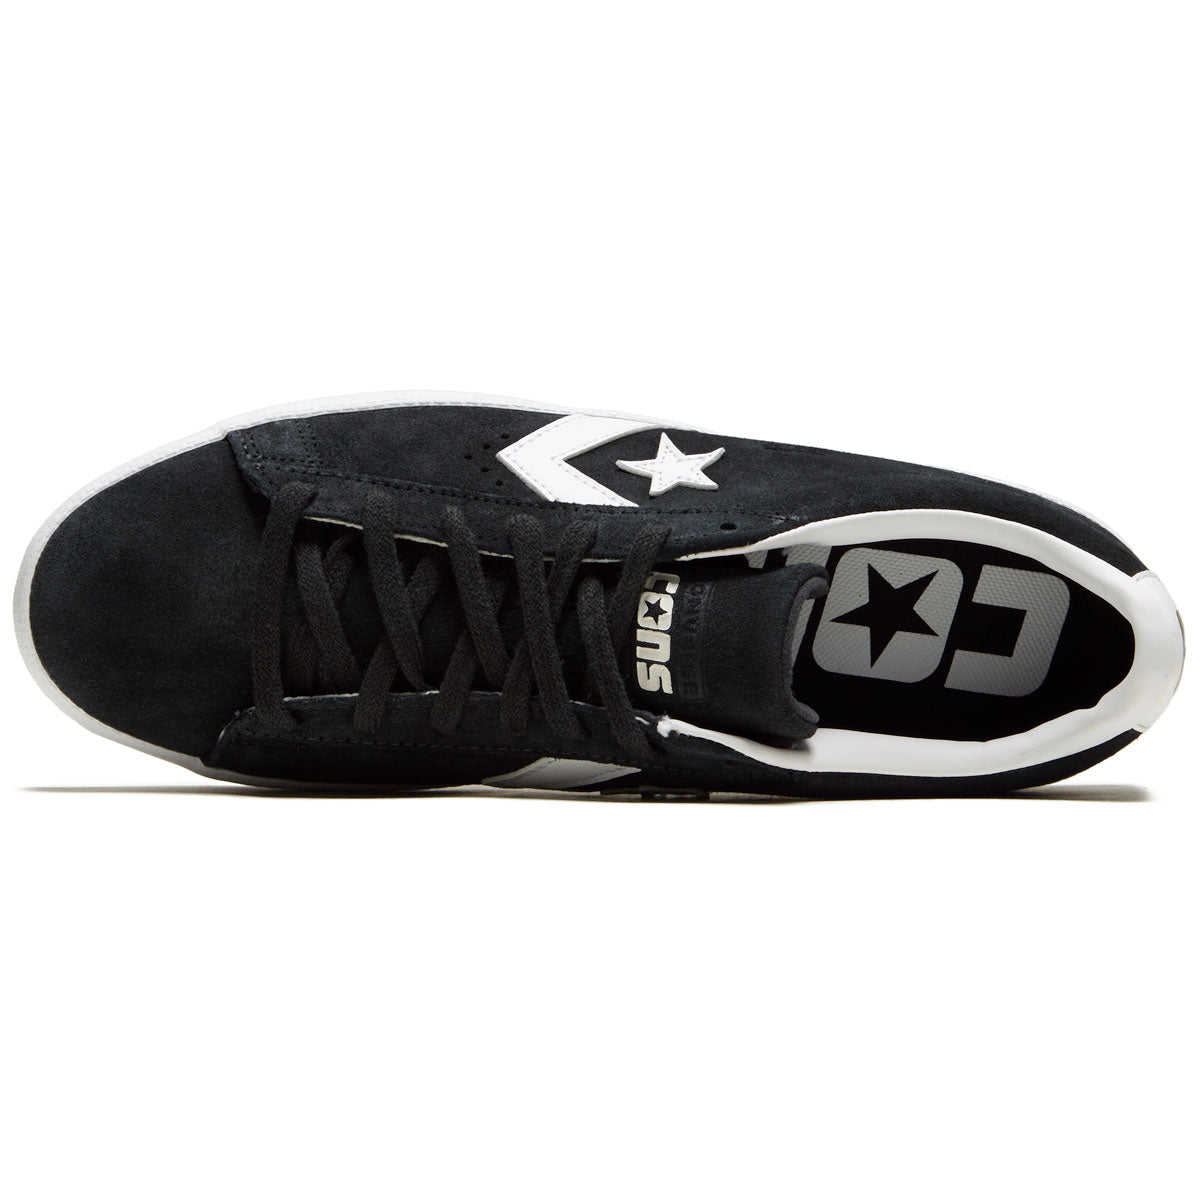 Converse Pl Vulc Pro Ox Shoes - Black/White/White image 3